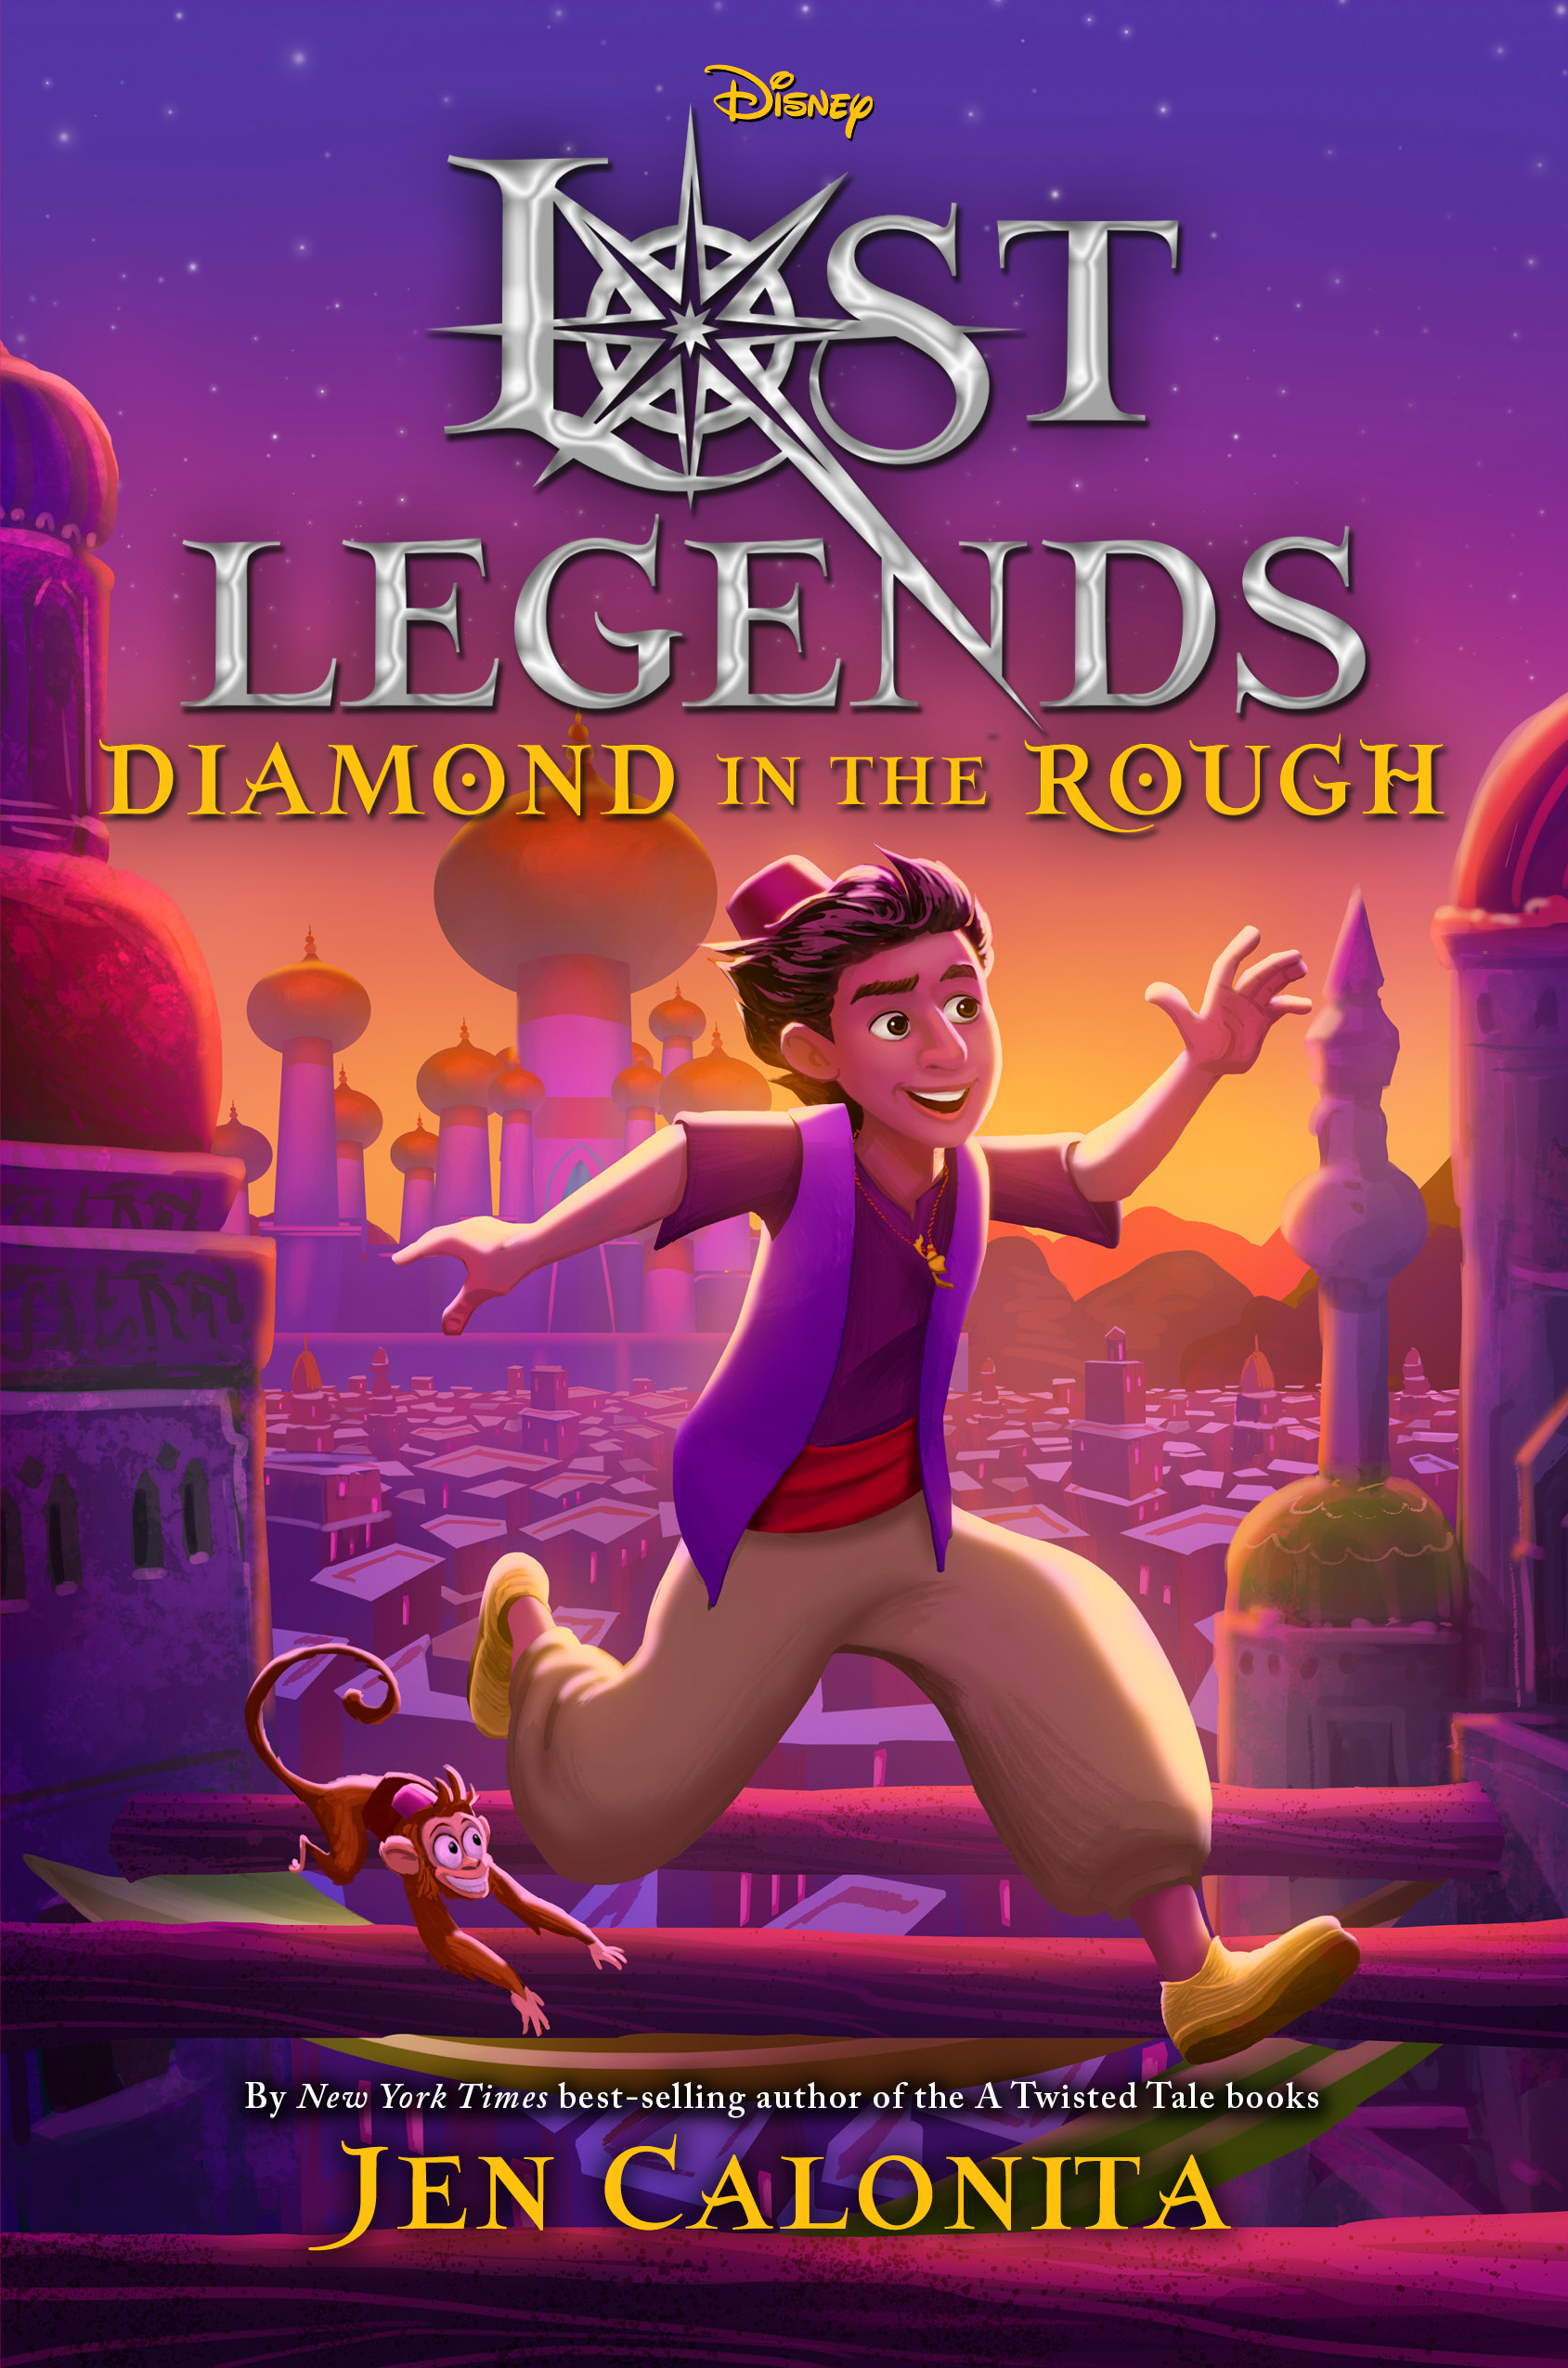 Disney Wish: A Recipe for Adventure by Wendy Wan-Long Shang - Disney Books